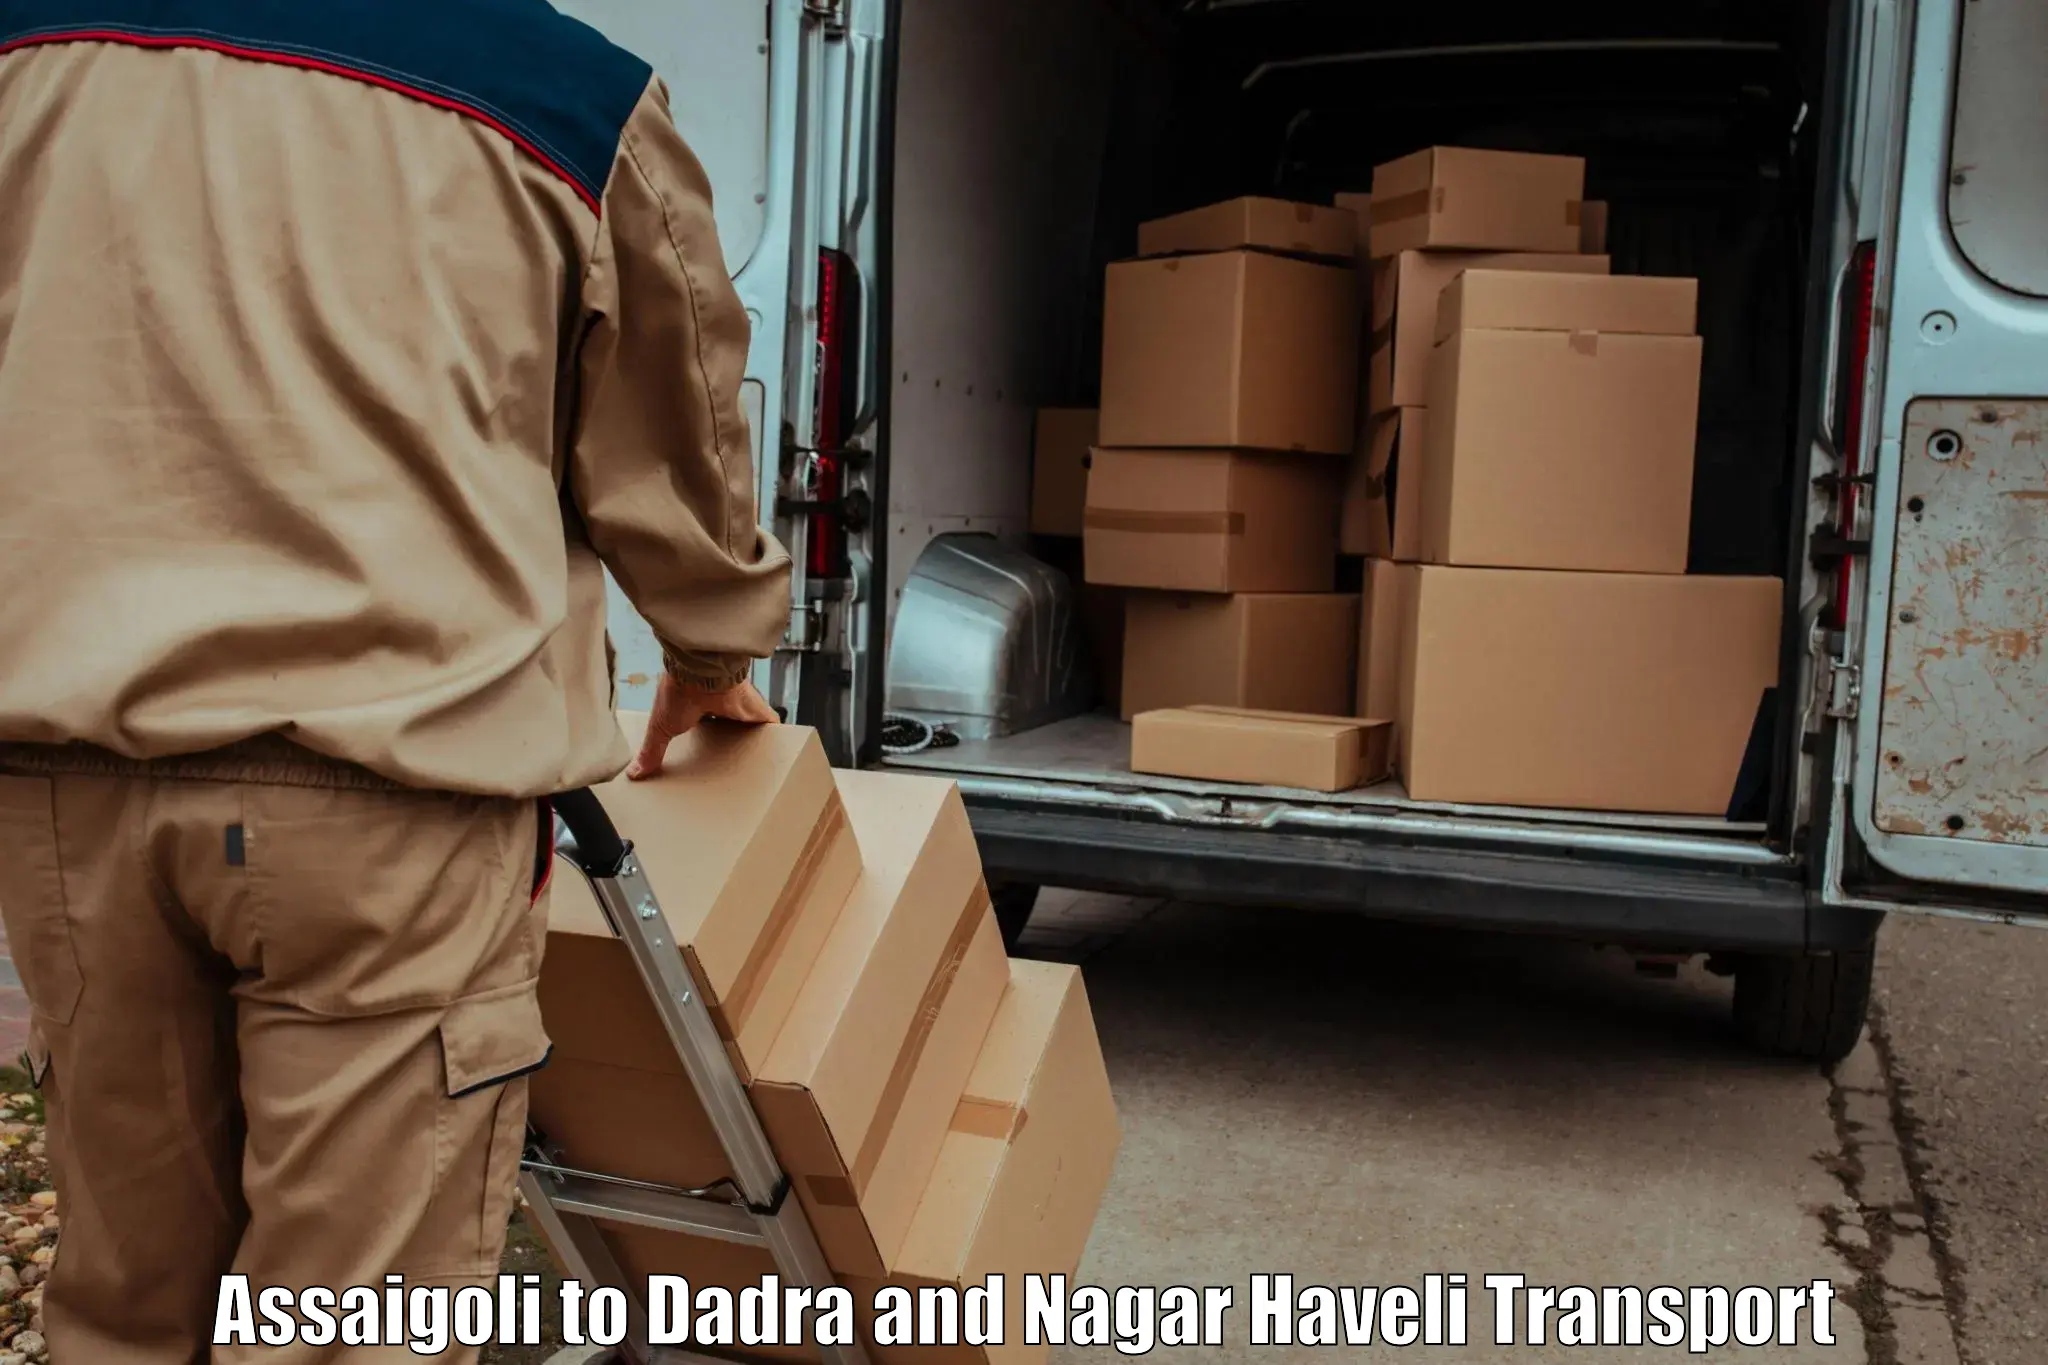 Transportation solution services in Assaigoli to Dadra and Nagar Haveli